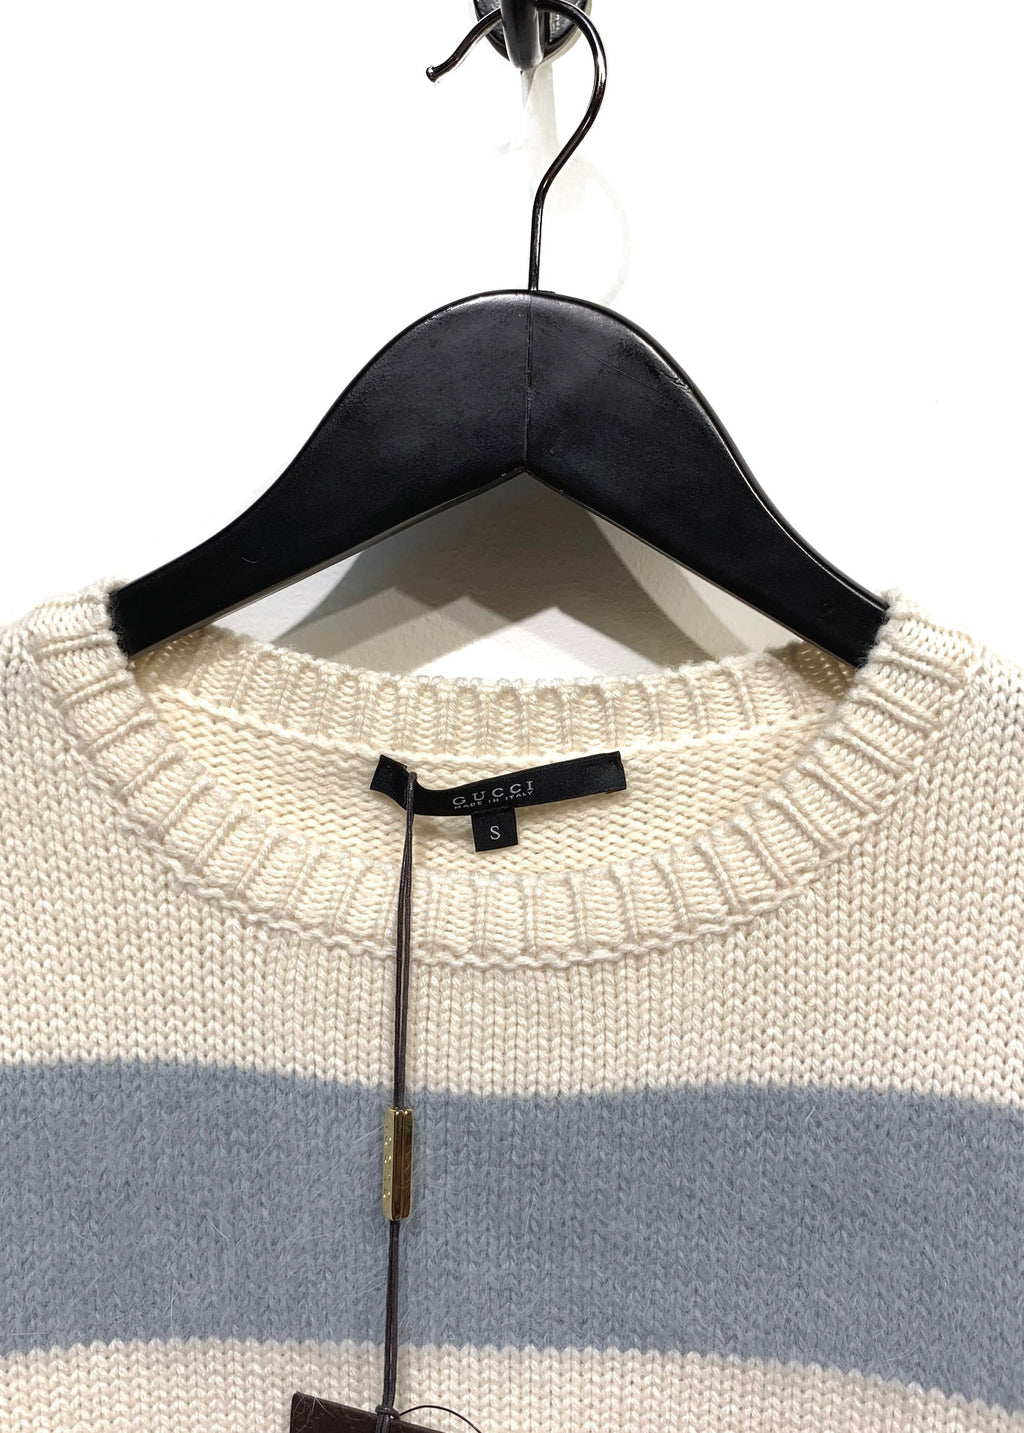 Gucci Ivory & Blue Striped Angora Blend Sweater